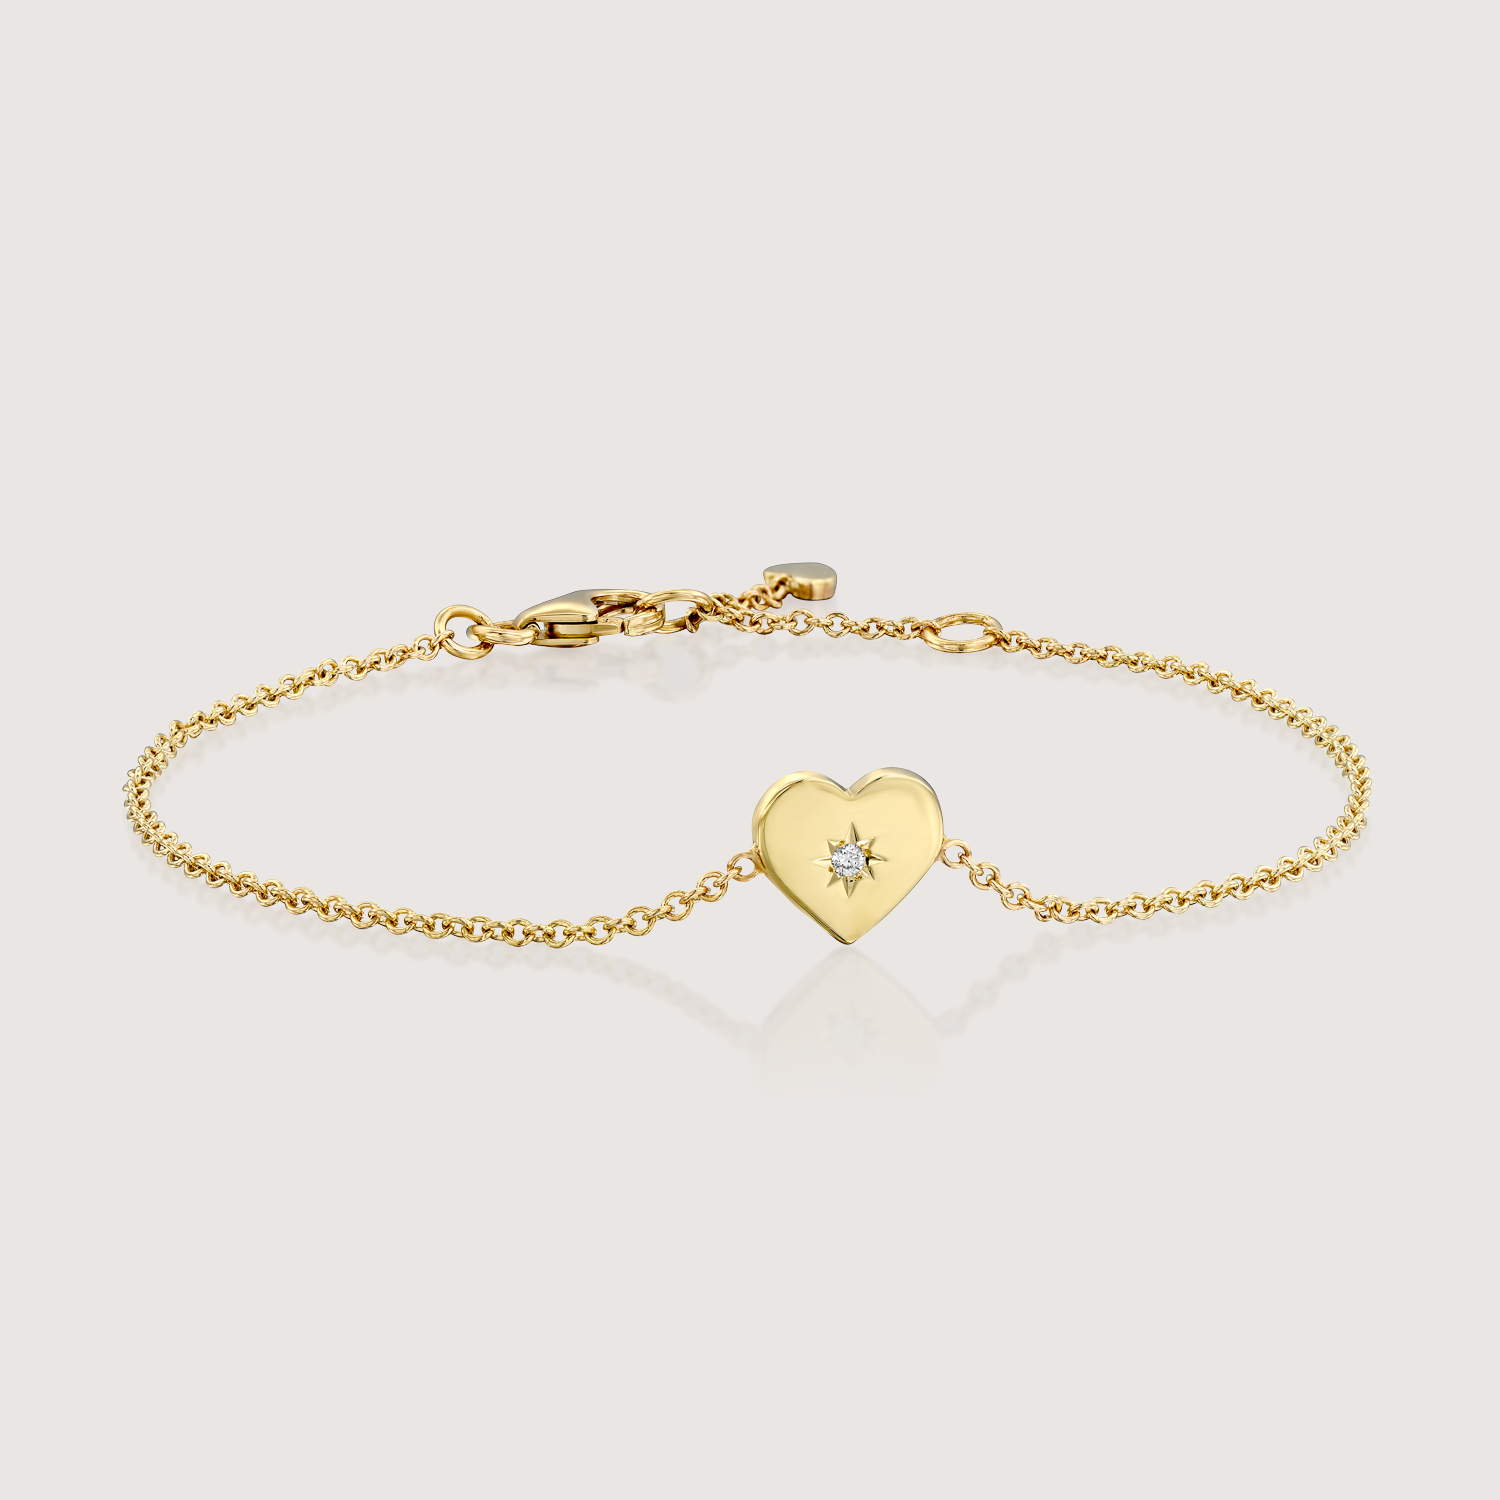 Heart Bracelet with stone